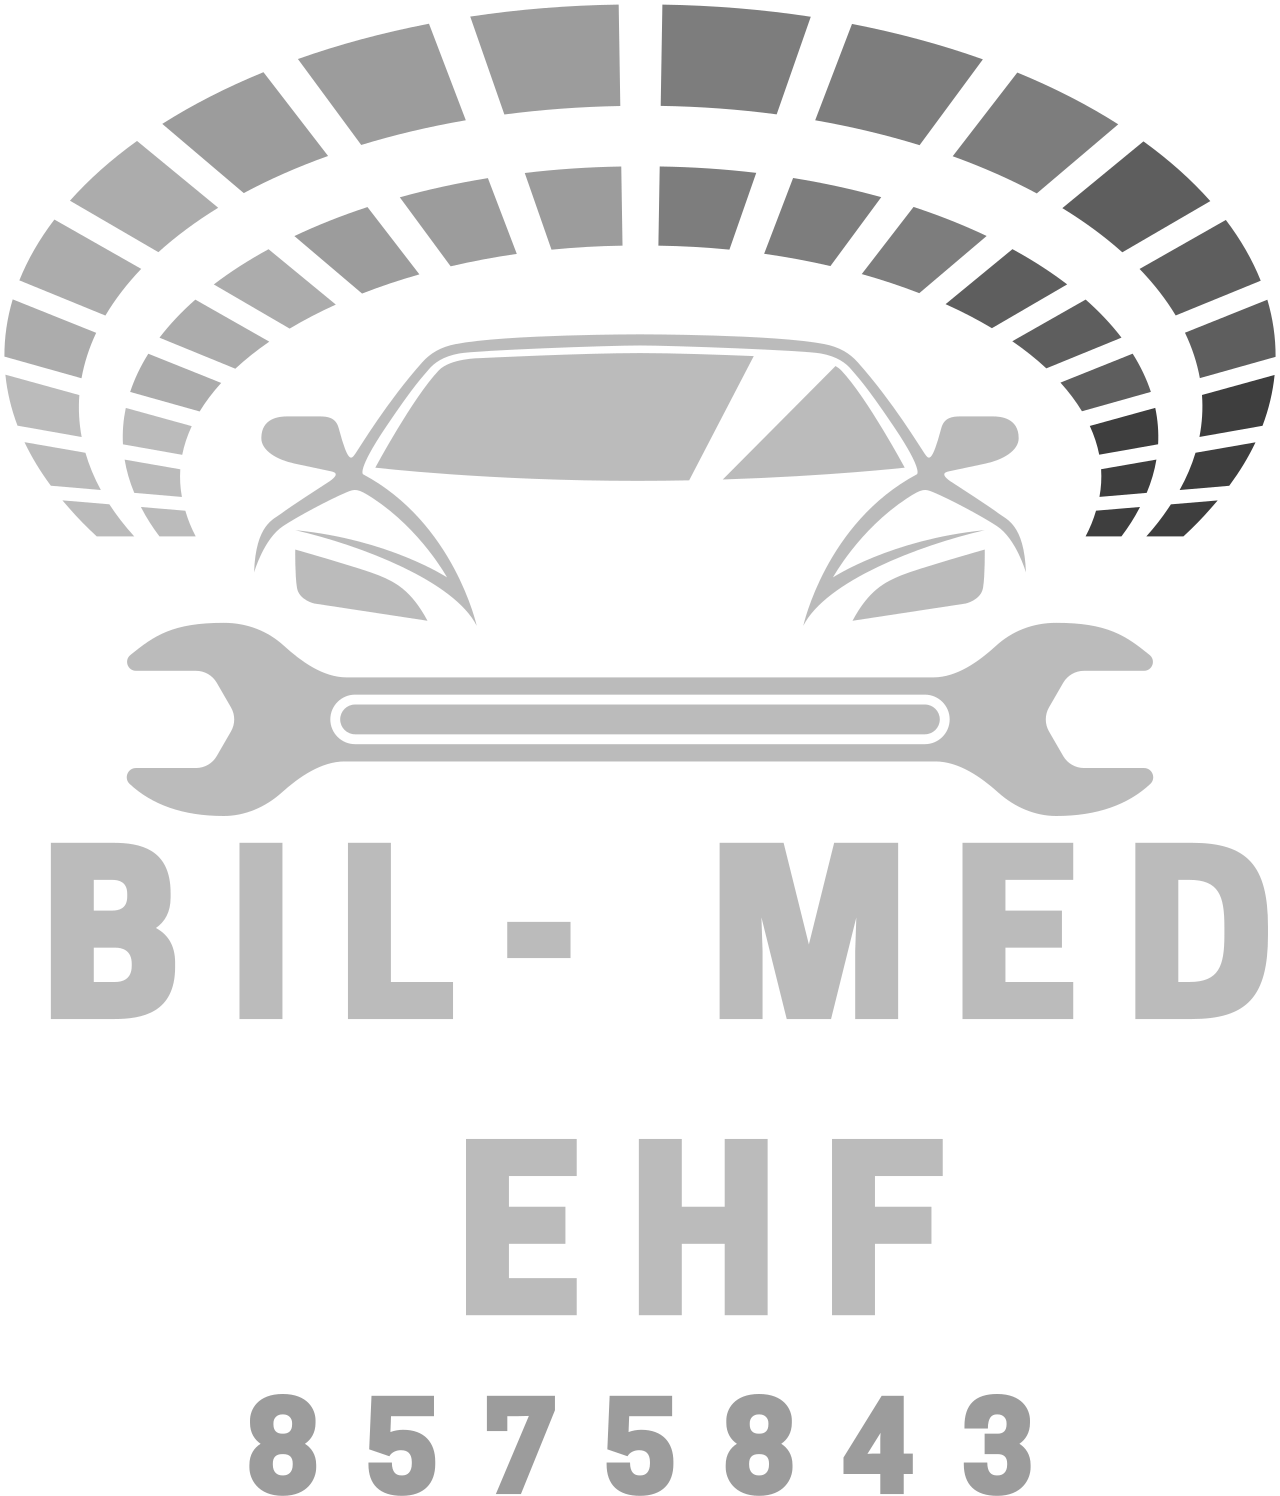 Bil- med 
ehf's web page